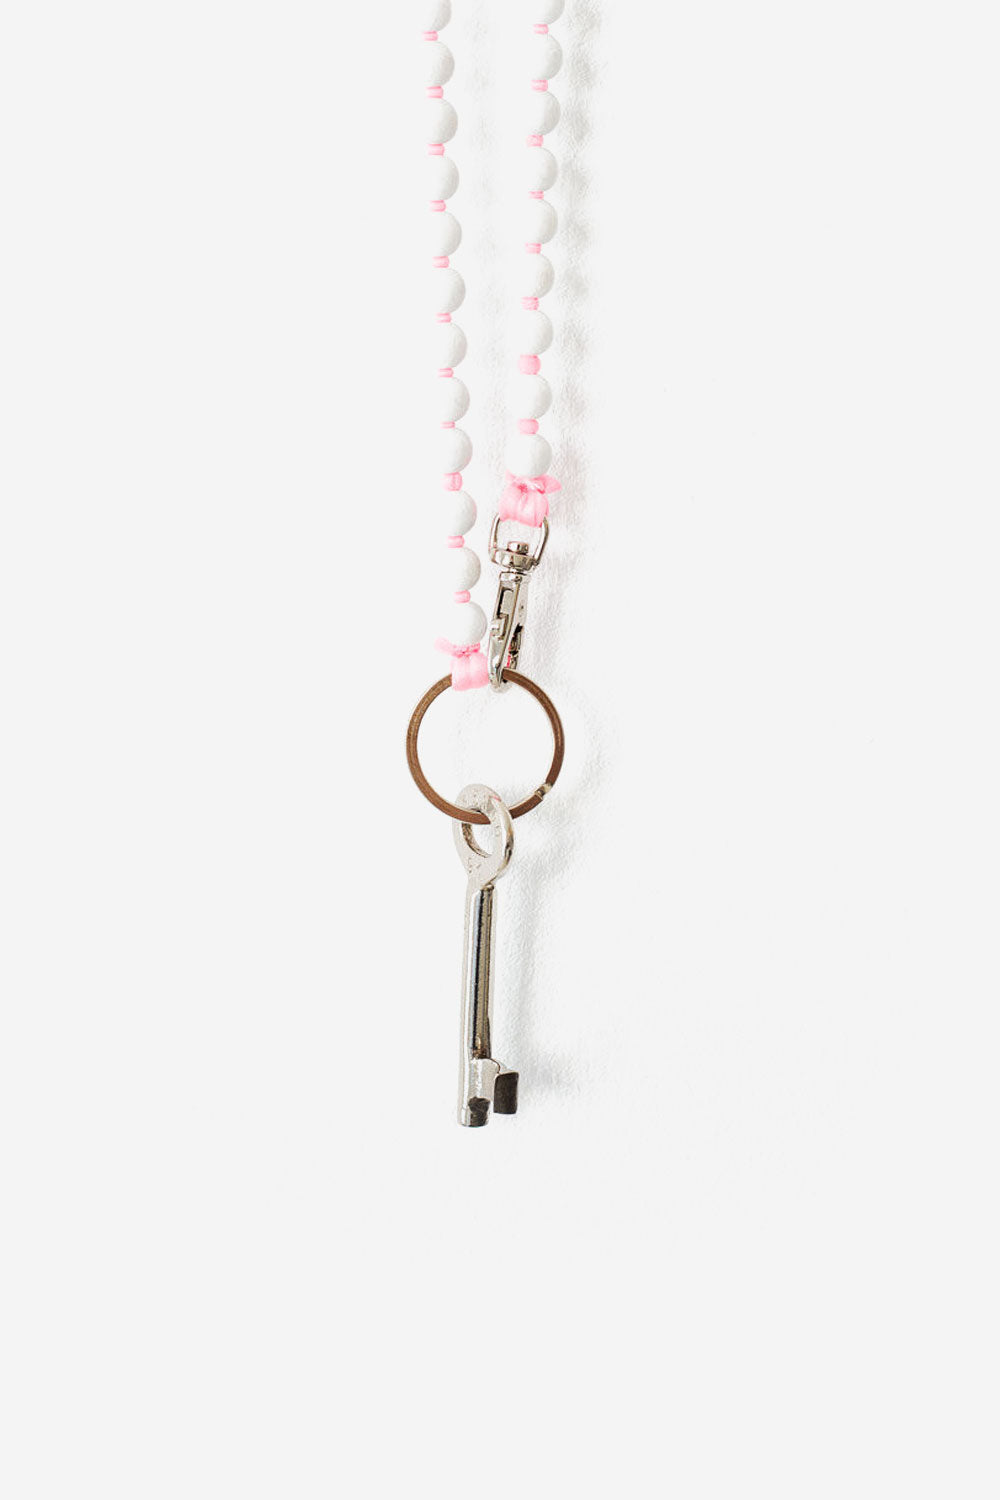 Perlen long keyholder white/pink